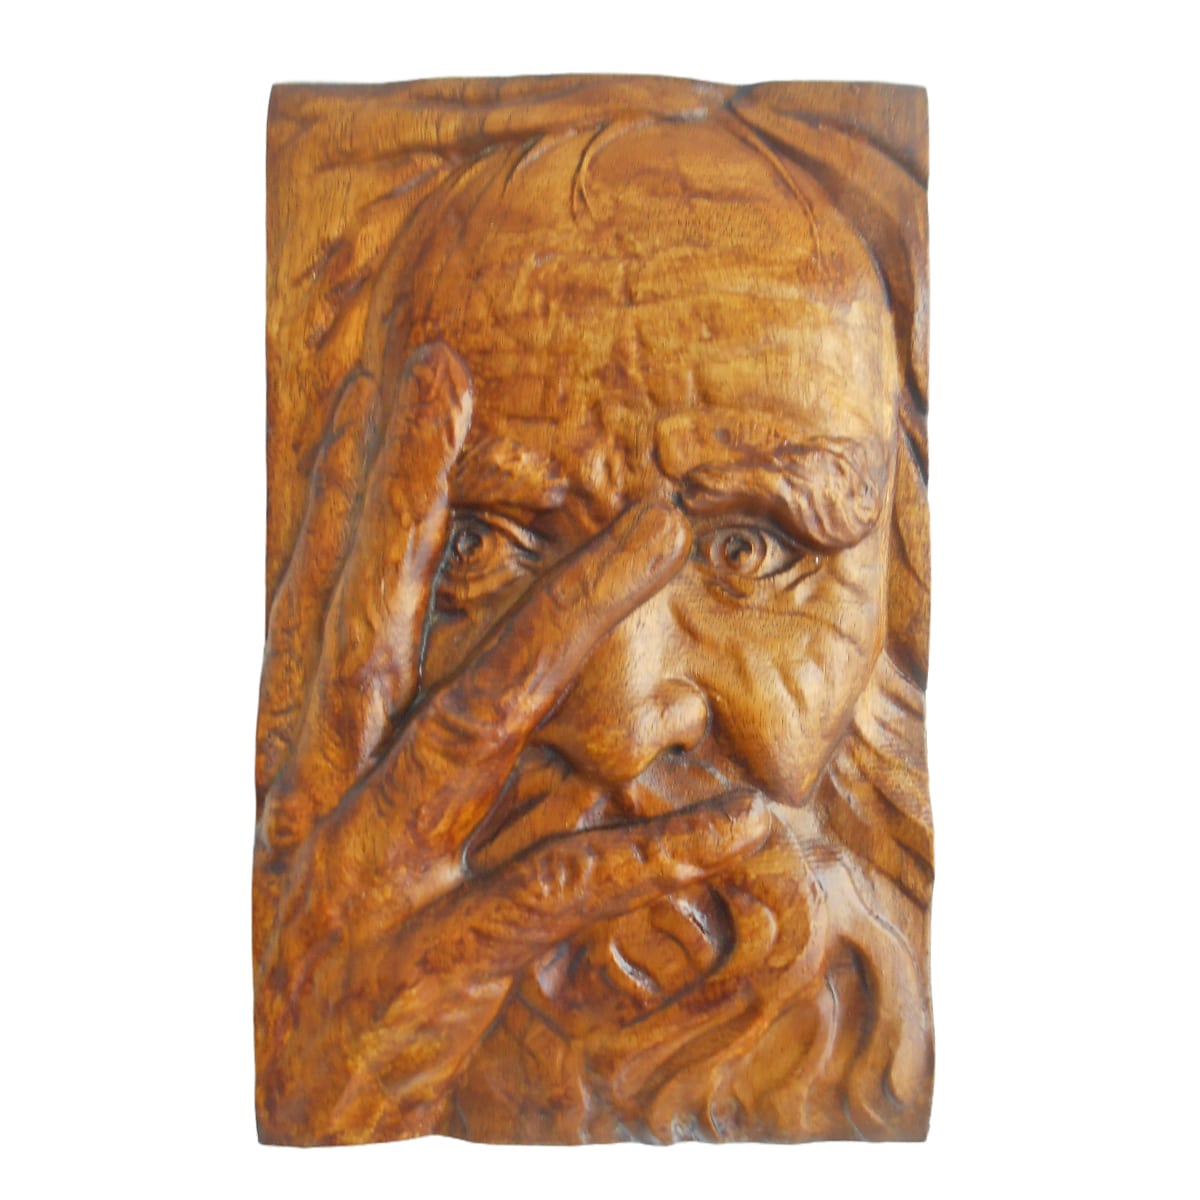 wood carved old man spirit face wall hanging wooden art decor sculpture figurine